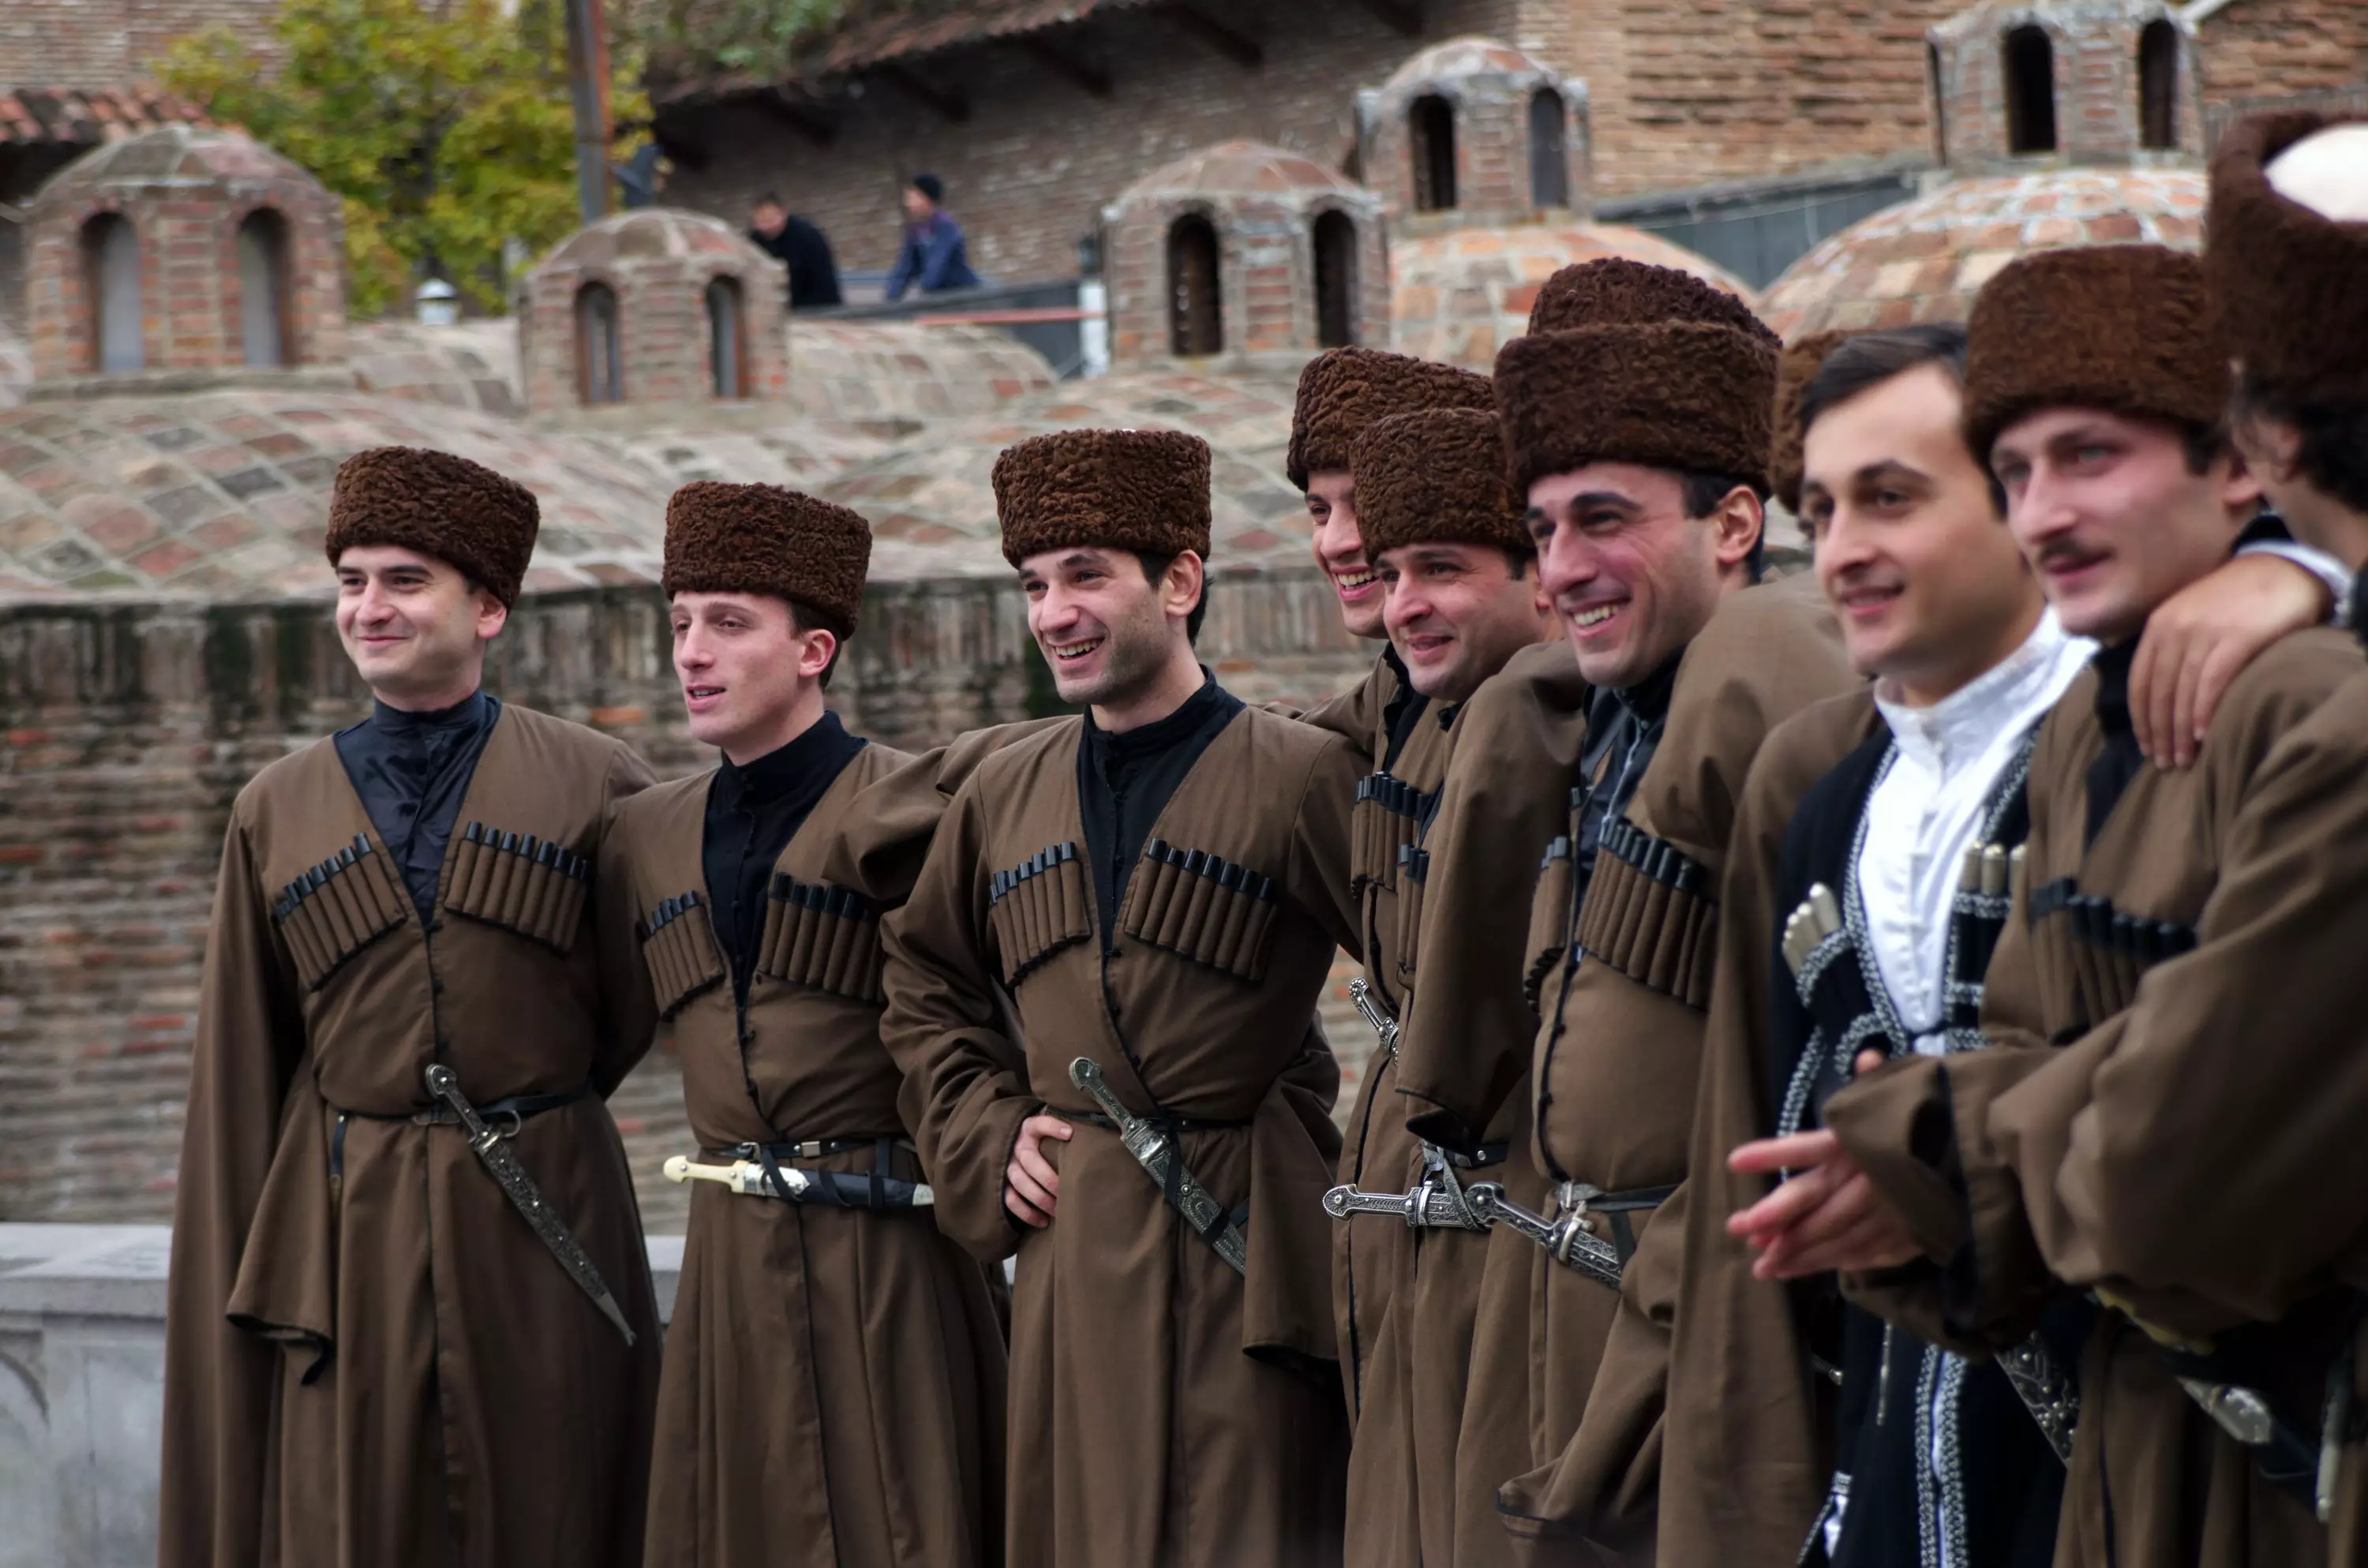 The Unique Georgian Folklore